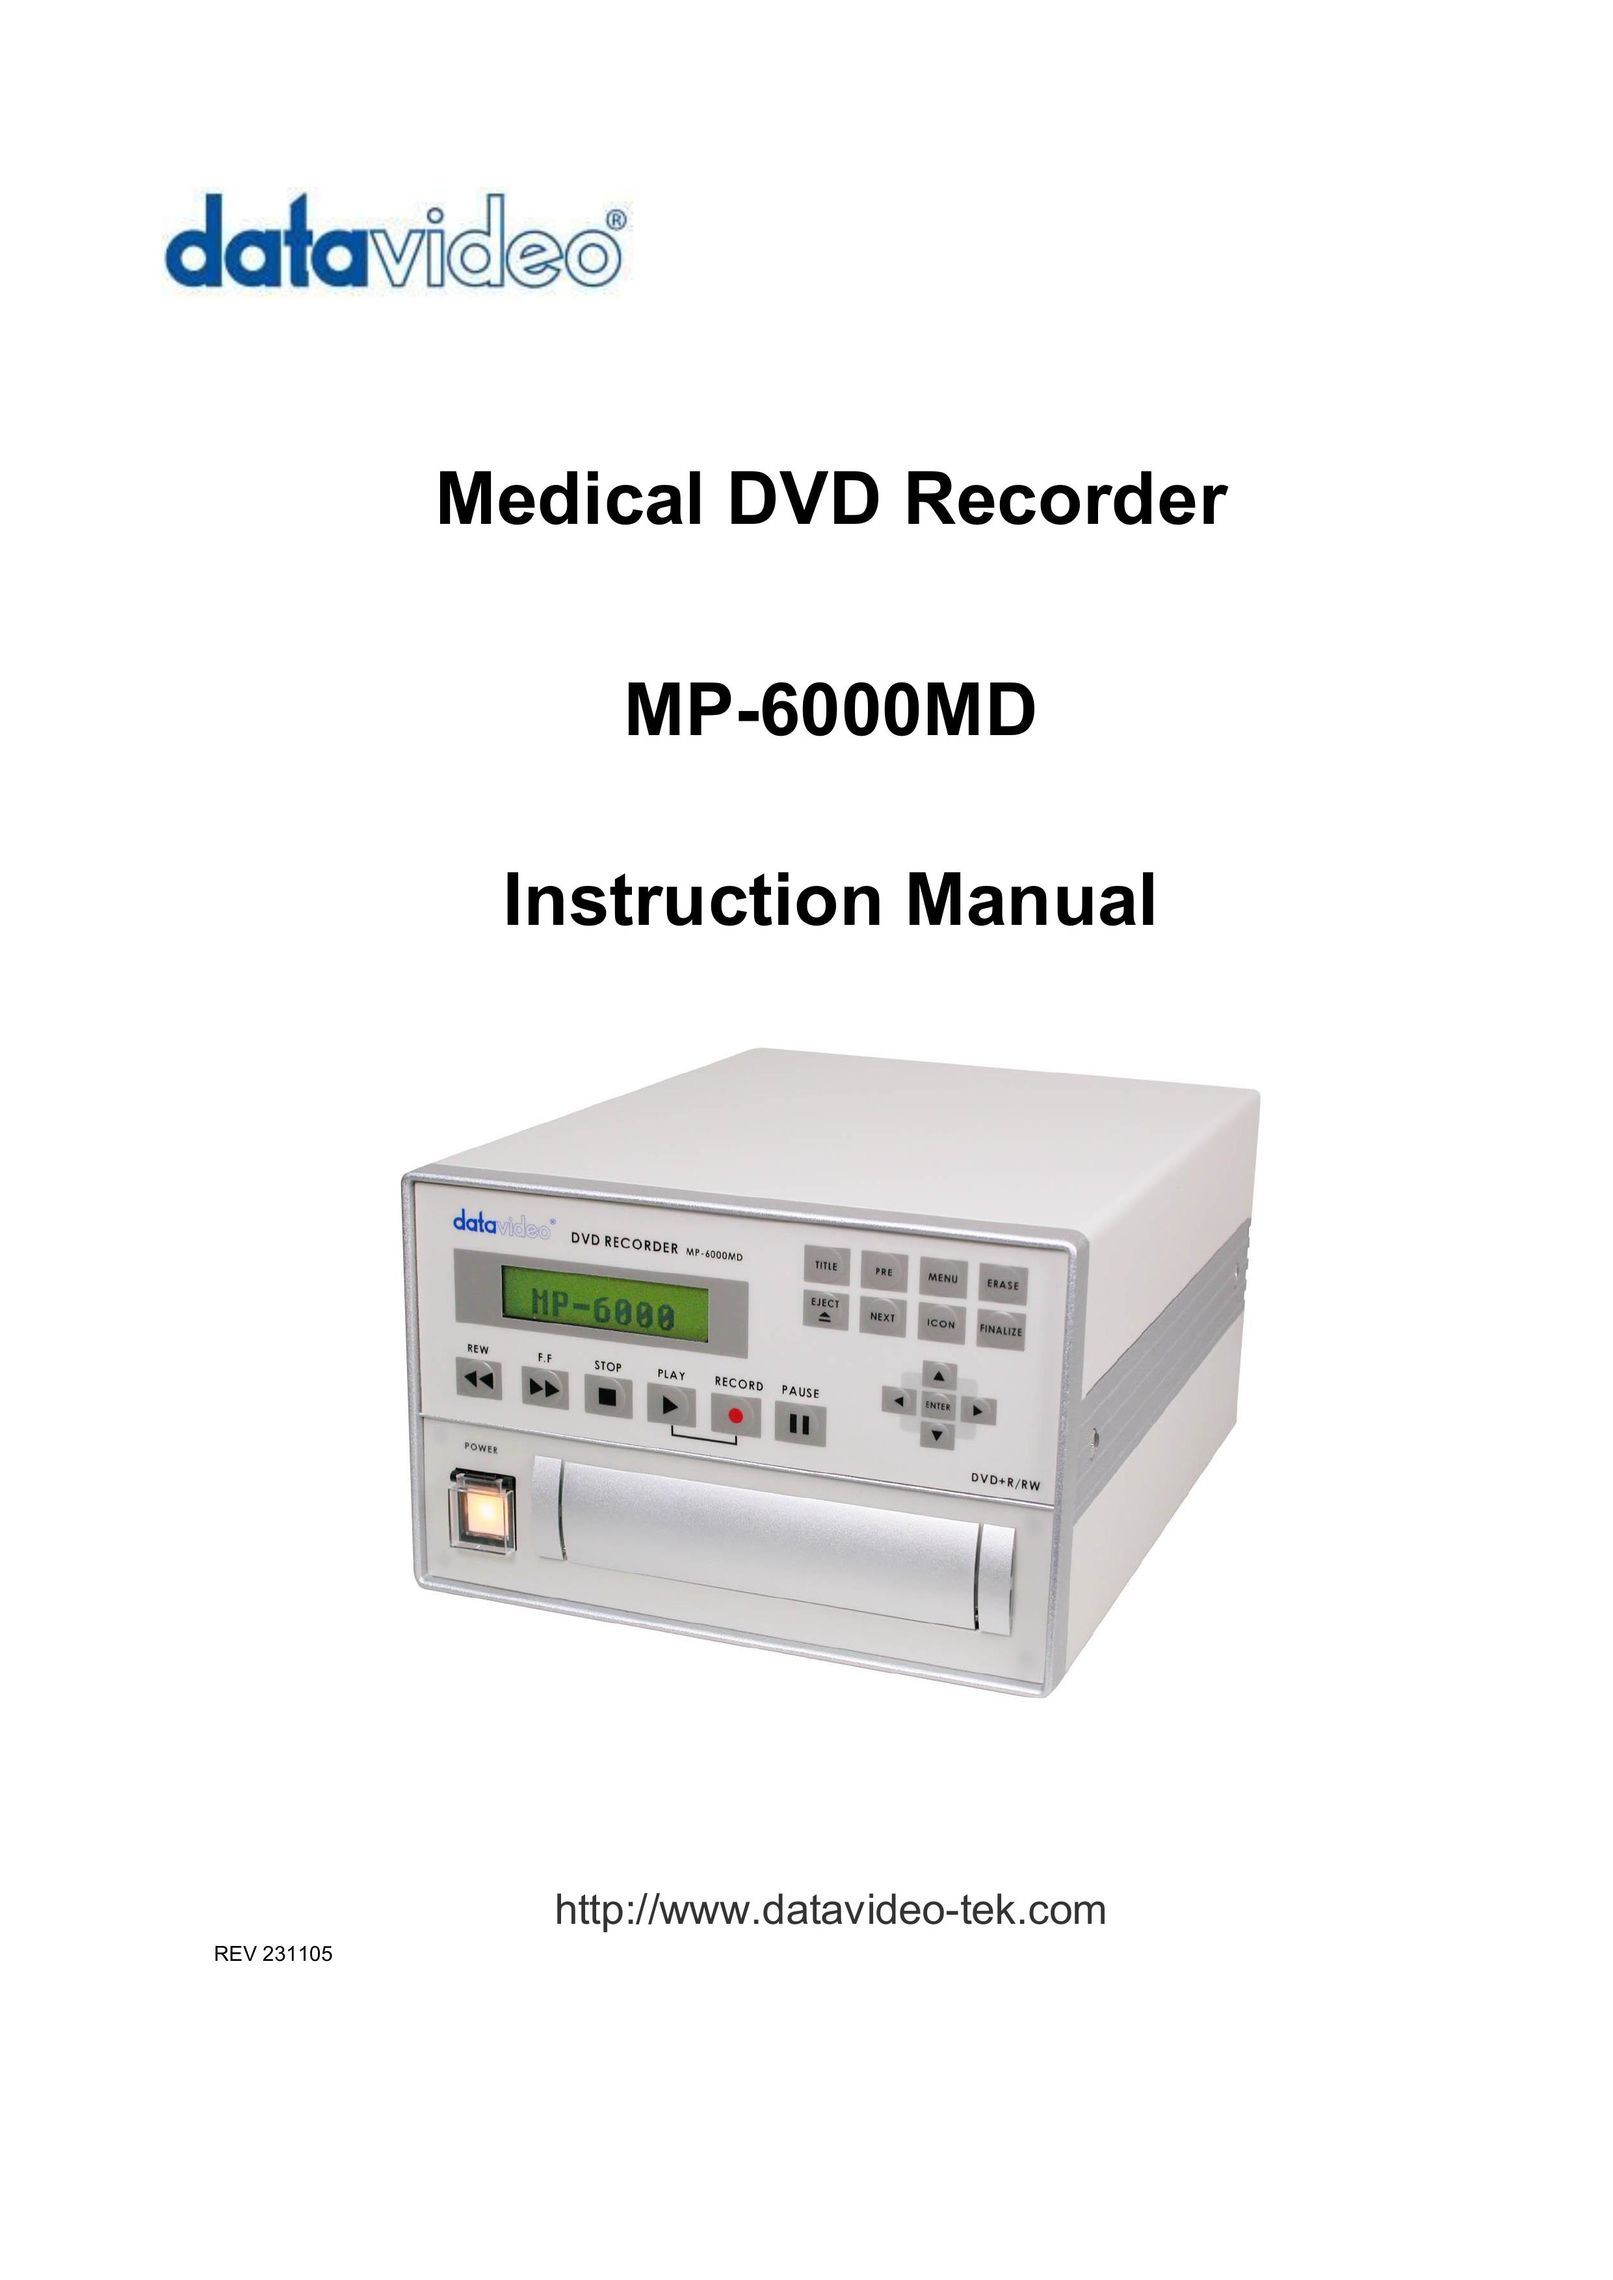 Datavideo MP6000MD DVD Recorder User Manual